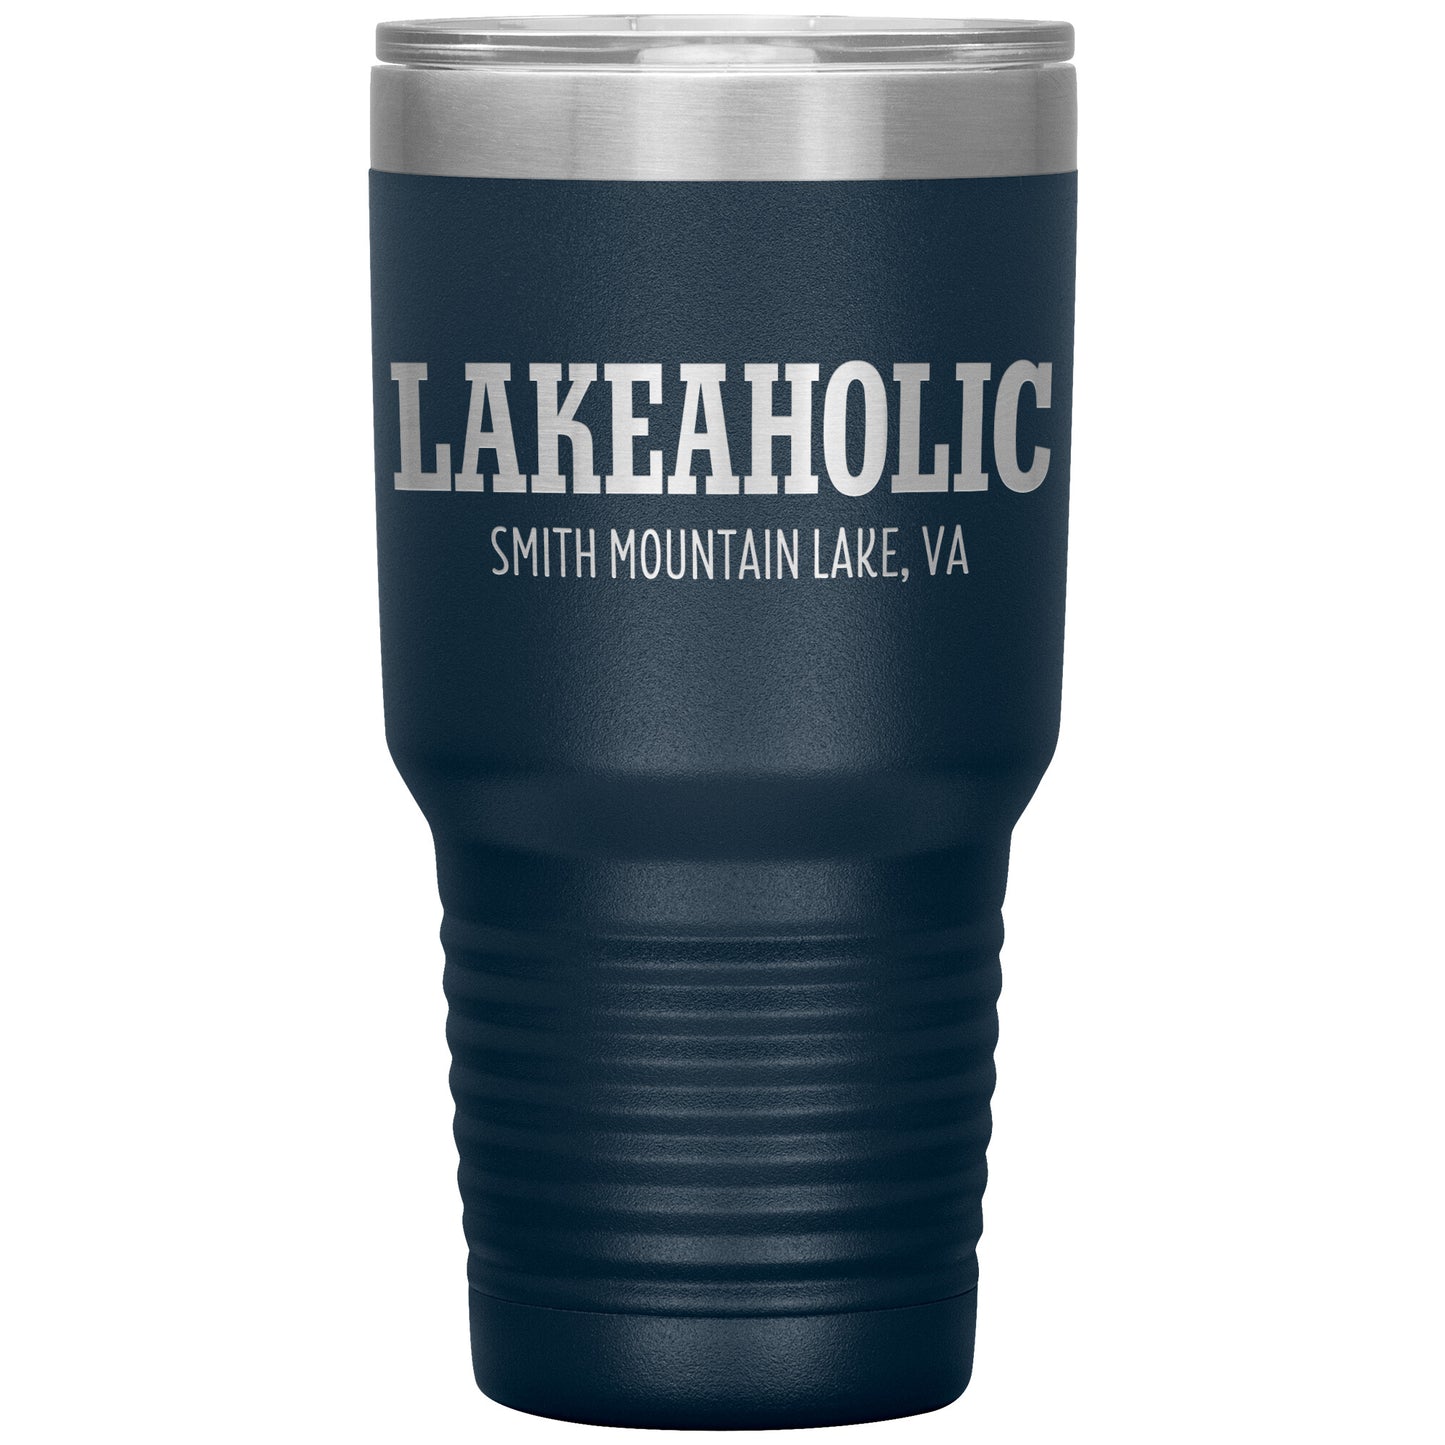 Lakeaholic Smith Mountain Lake - Laser Etched Drink Tumbler